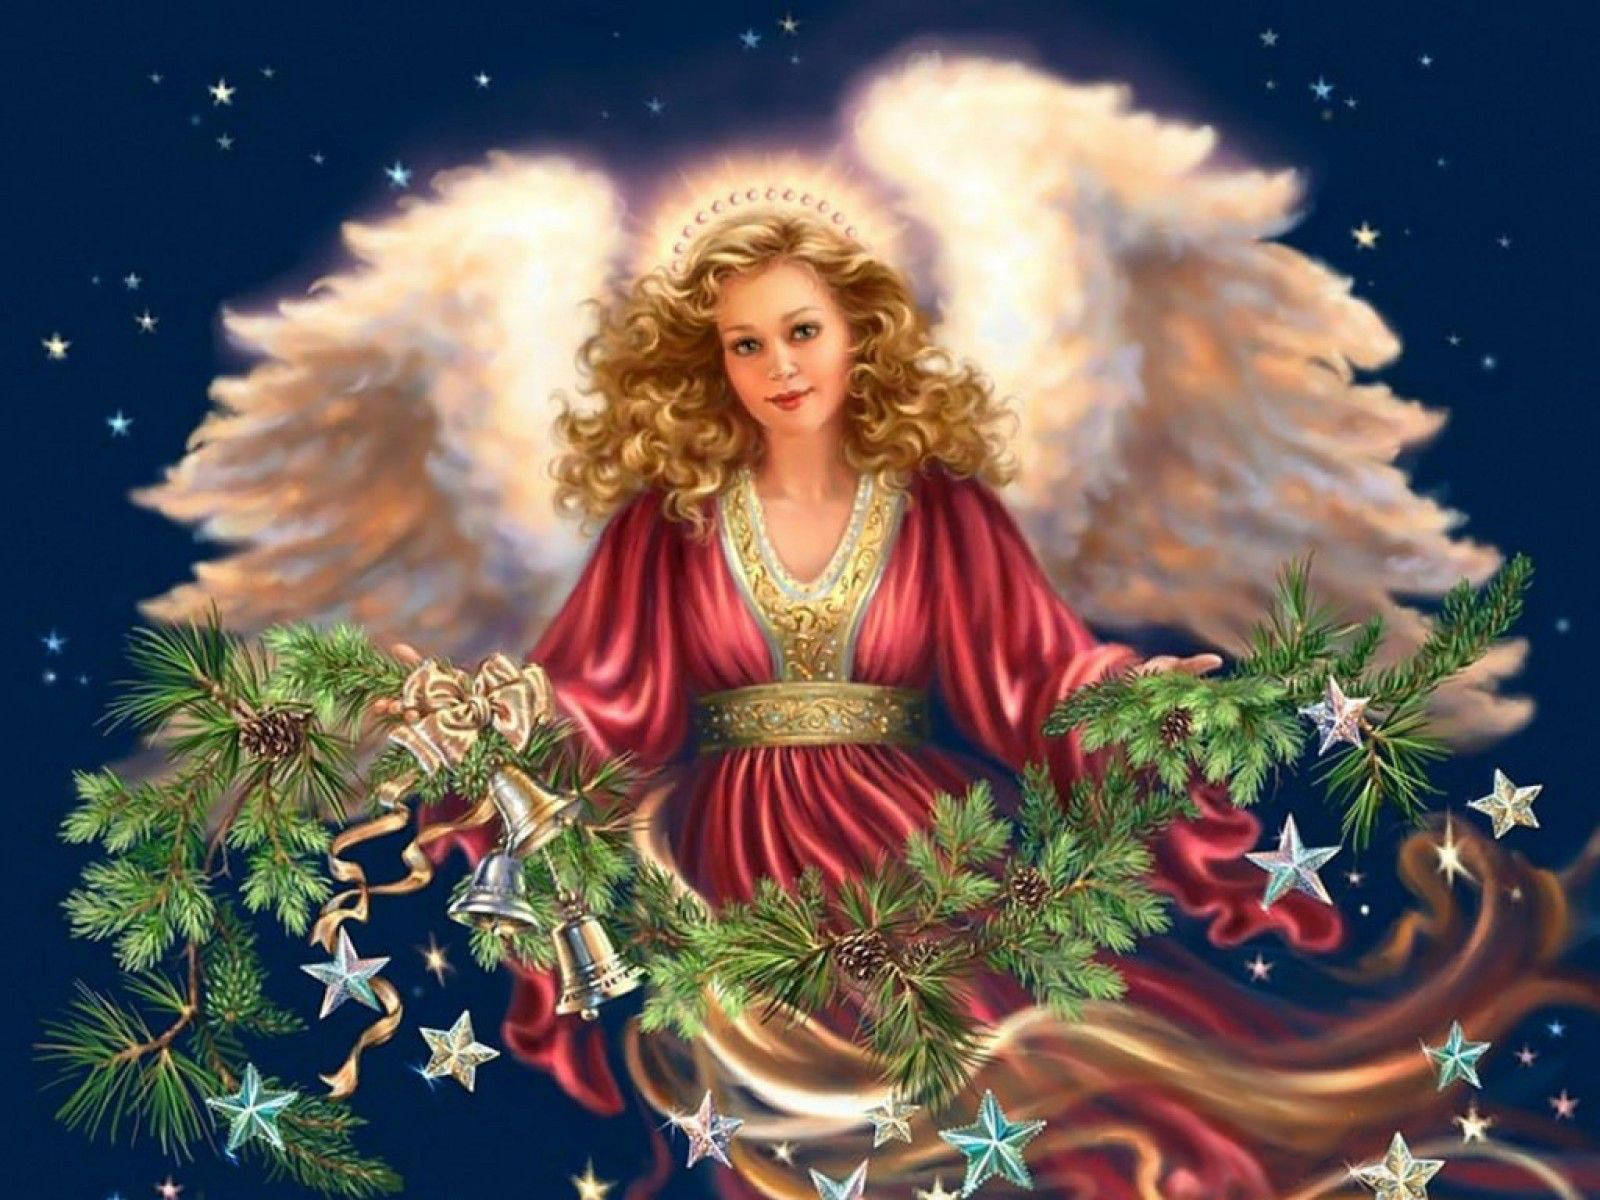 Divine Christmas Angel Background